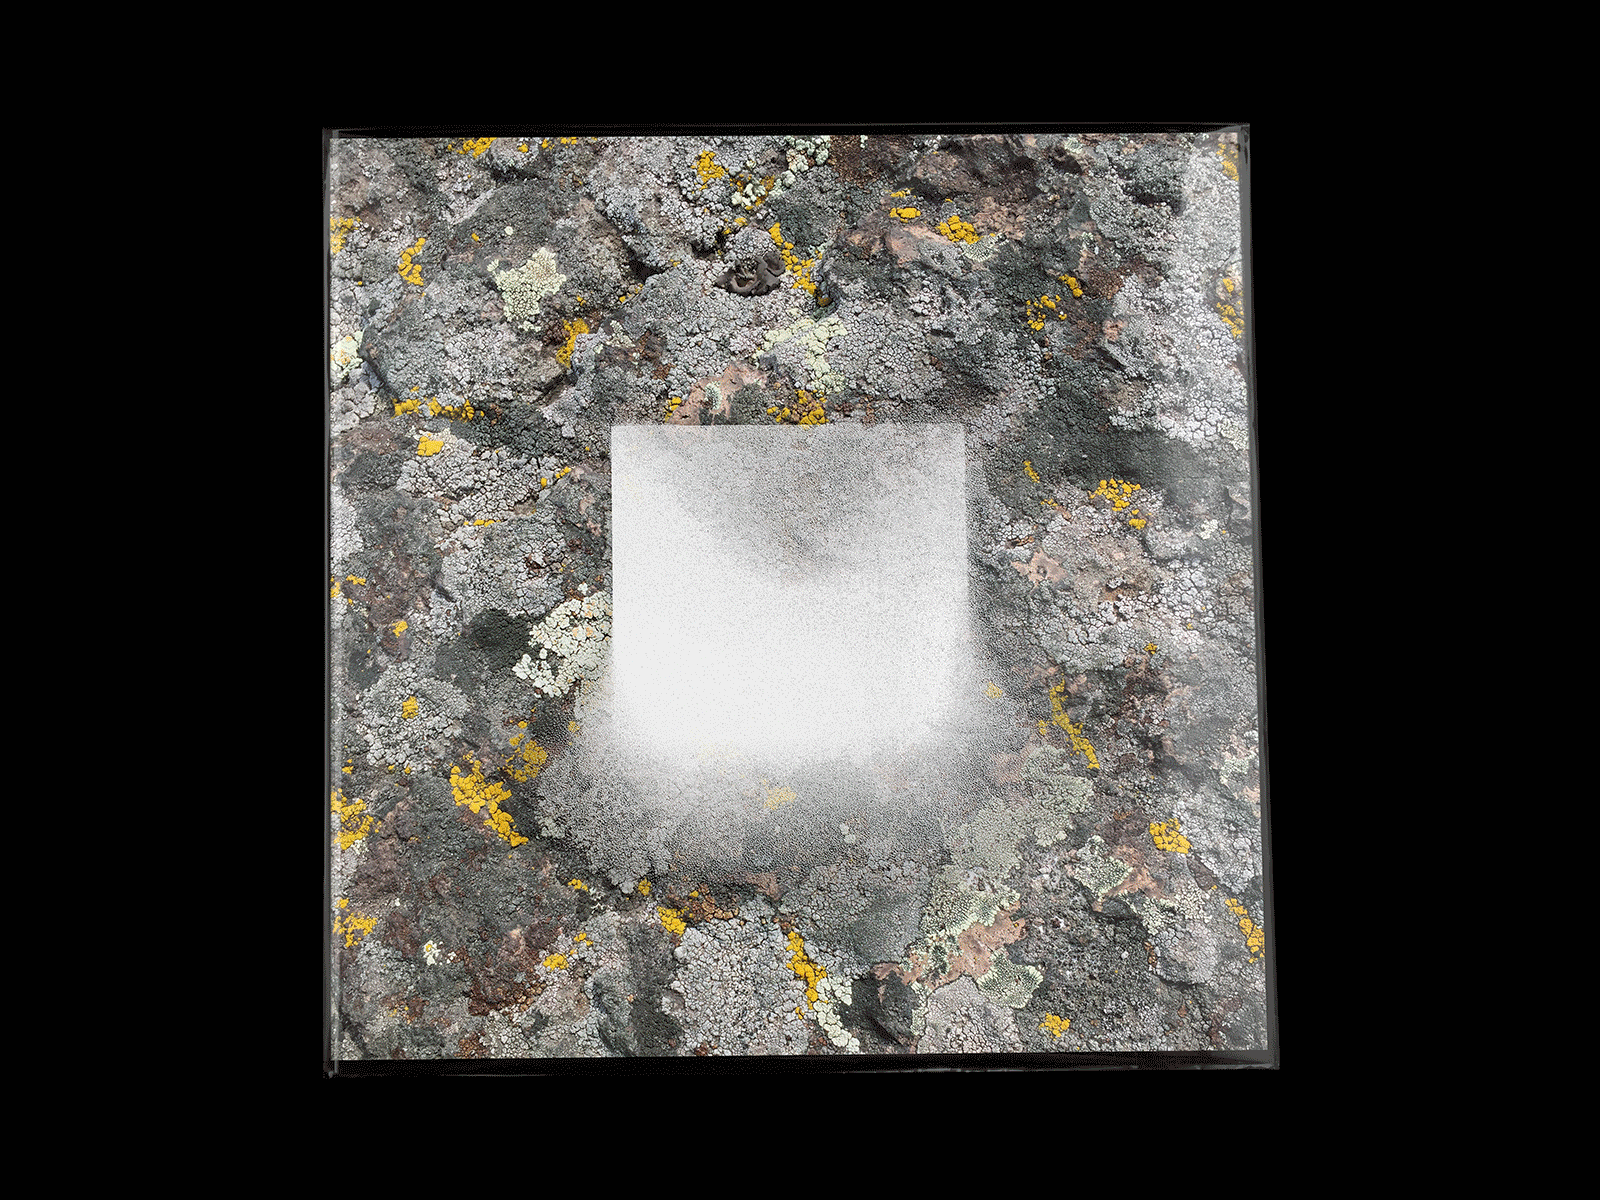 Late night album art album art album artwork album cover art dither music photography photoshop texture textures